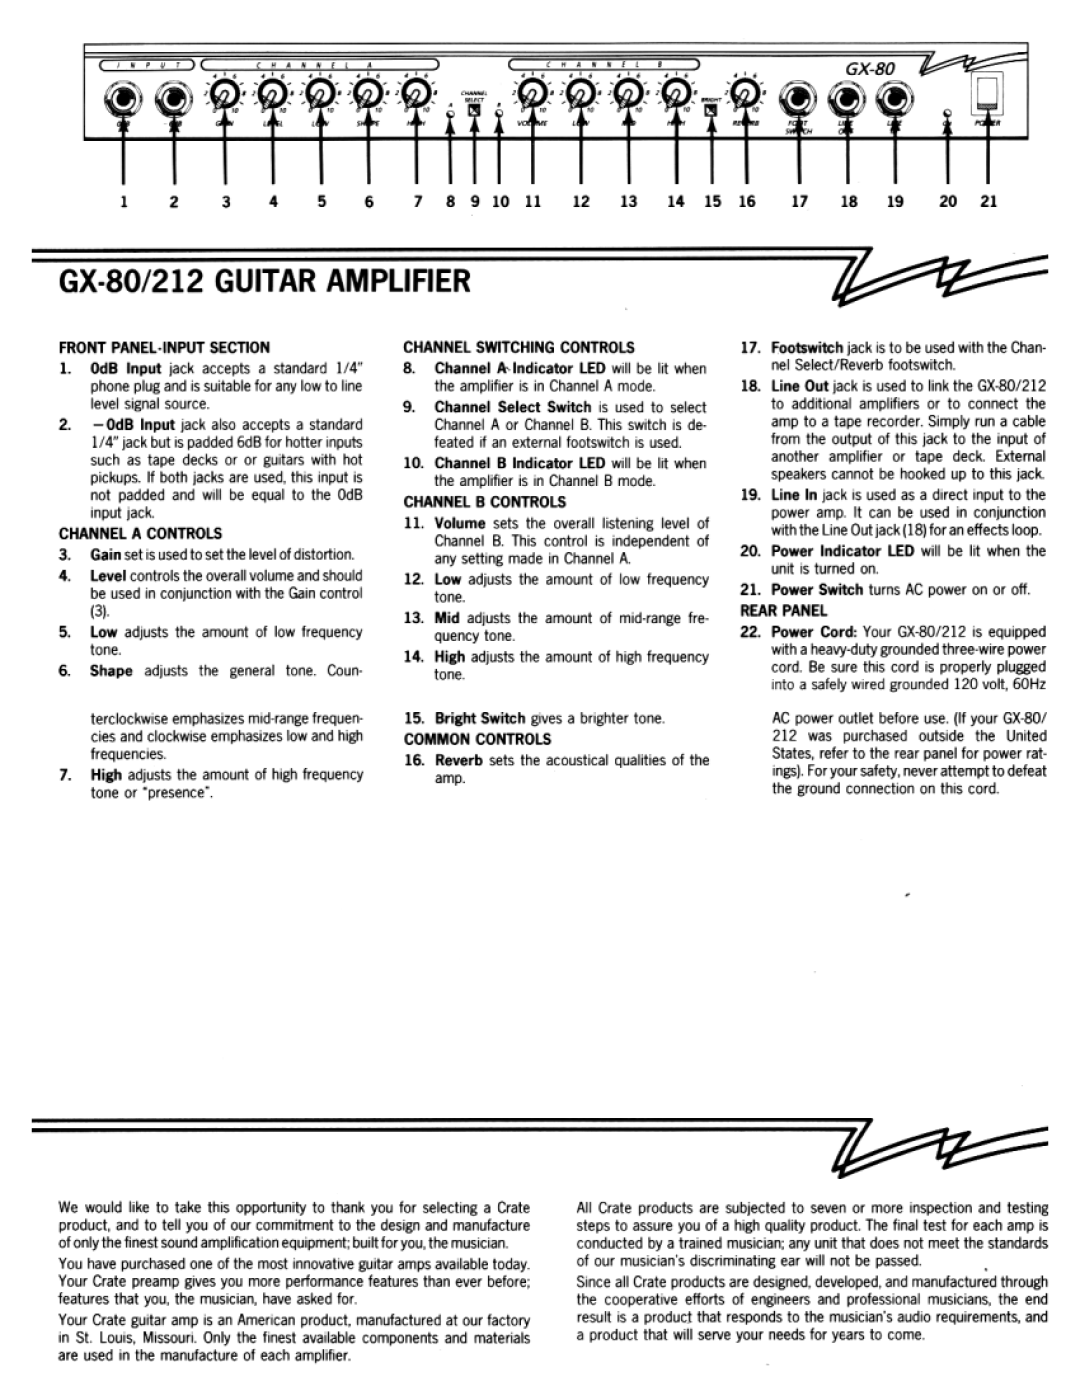 Crate Amplifiers GX-80 manual 